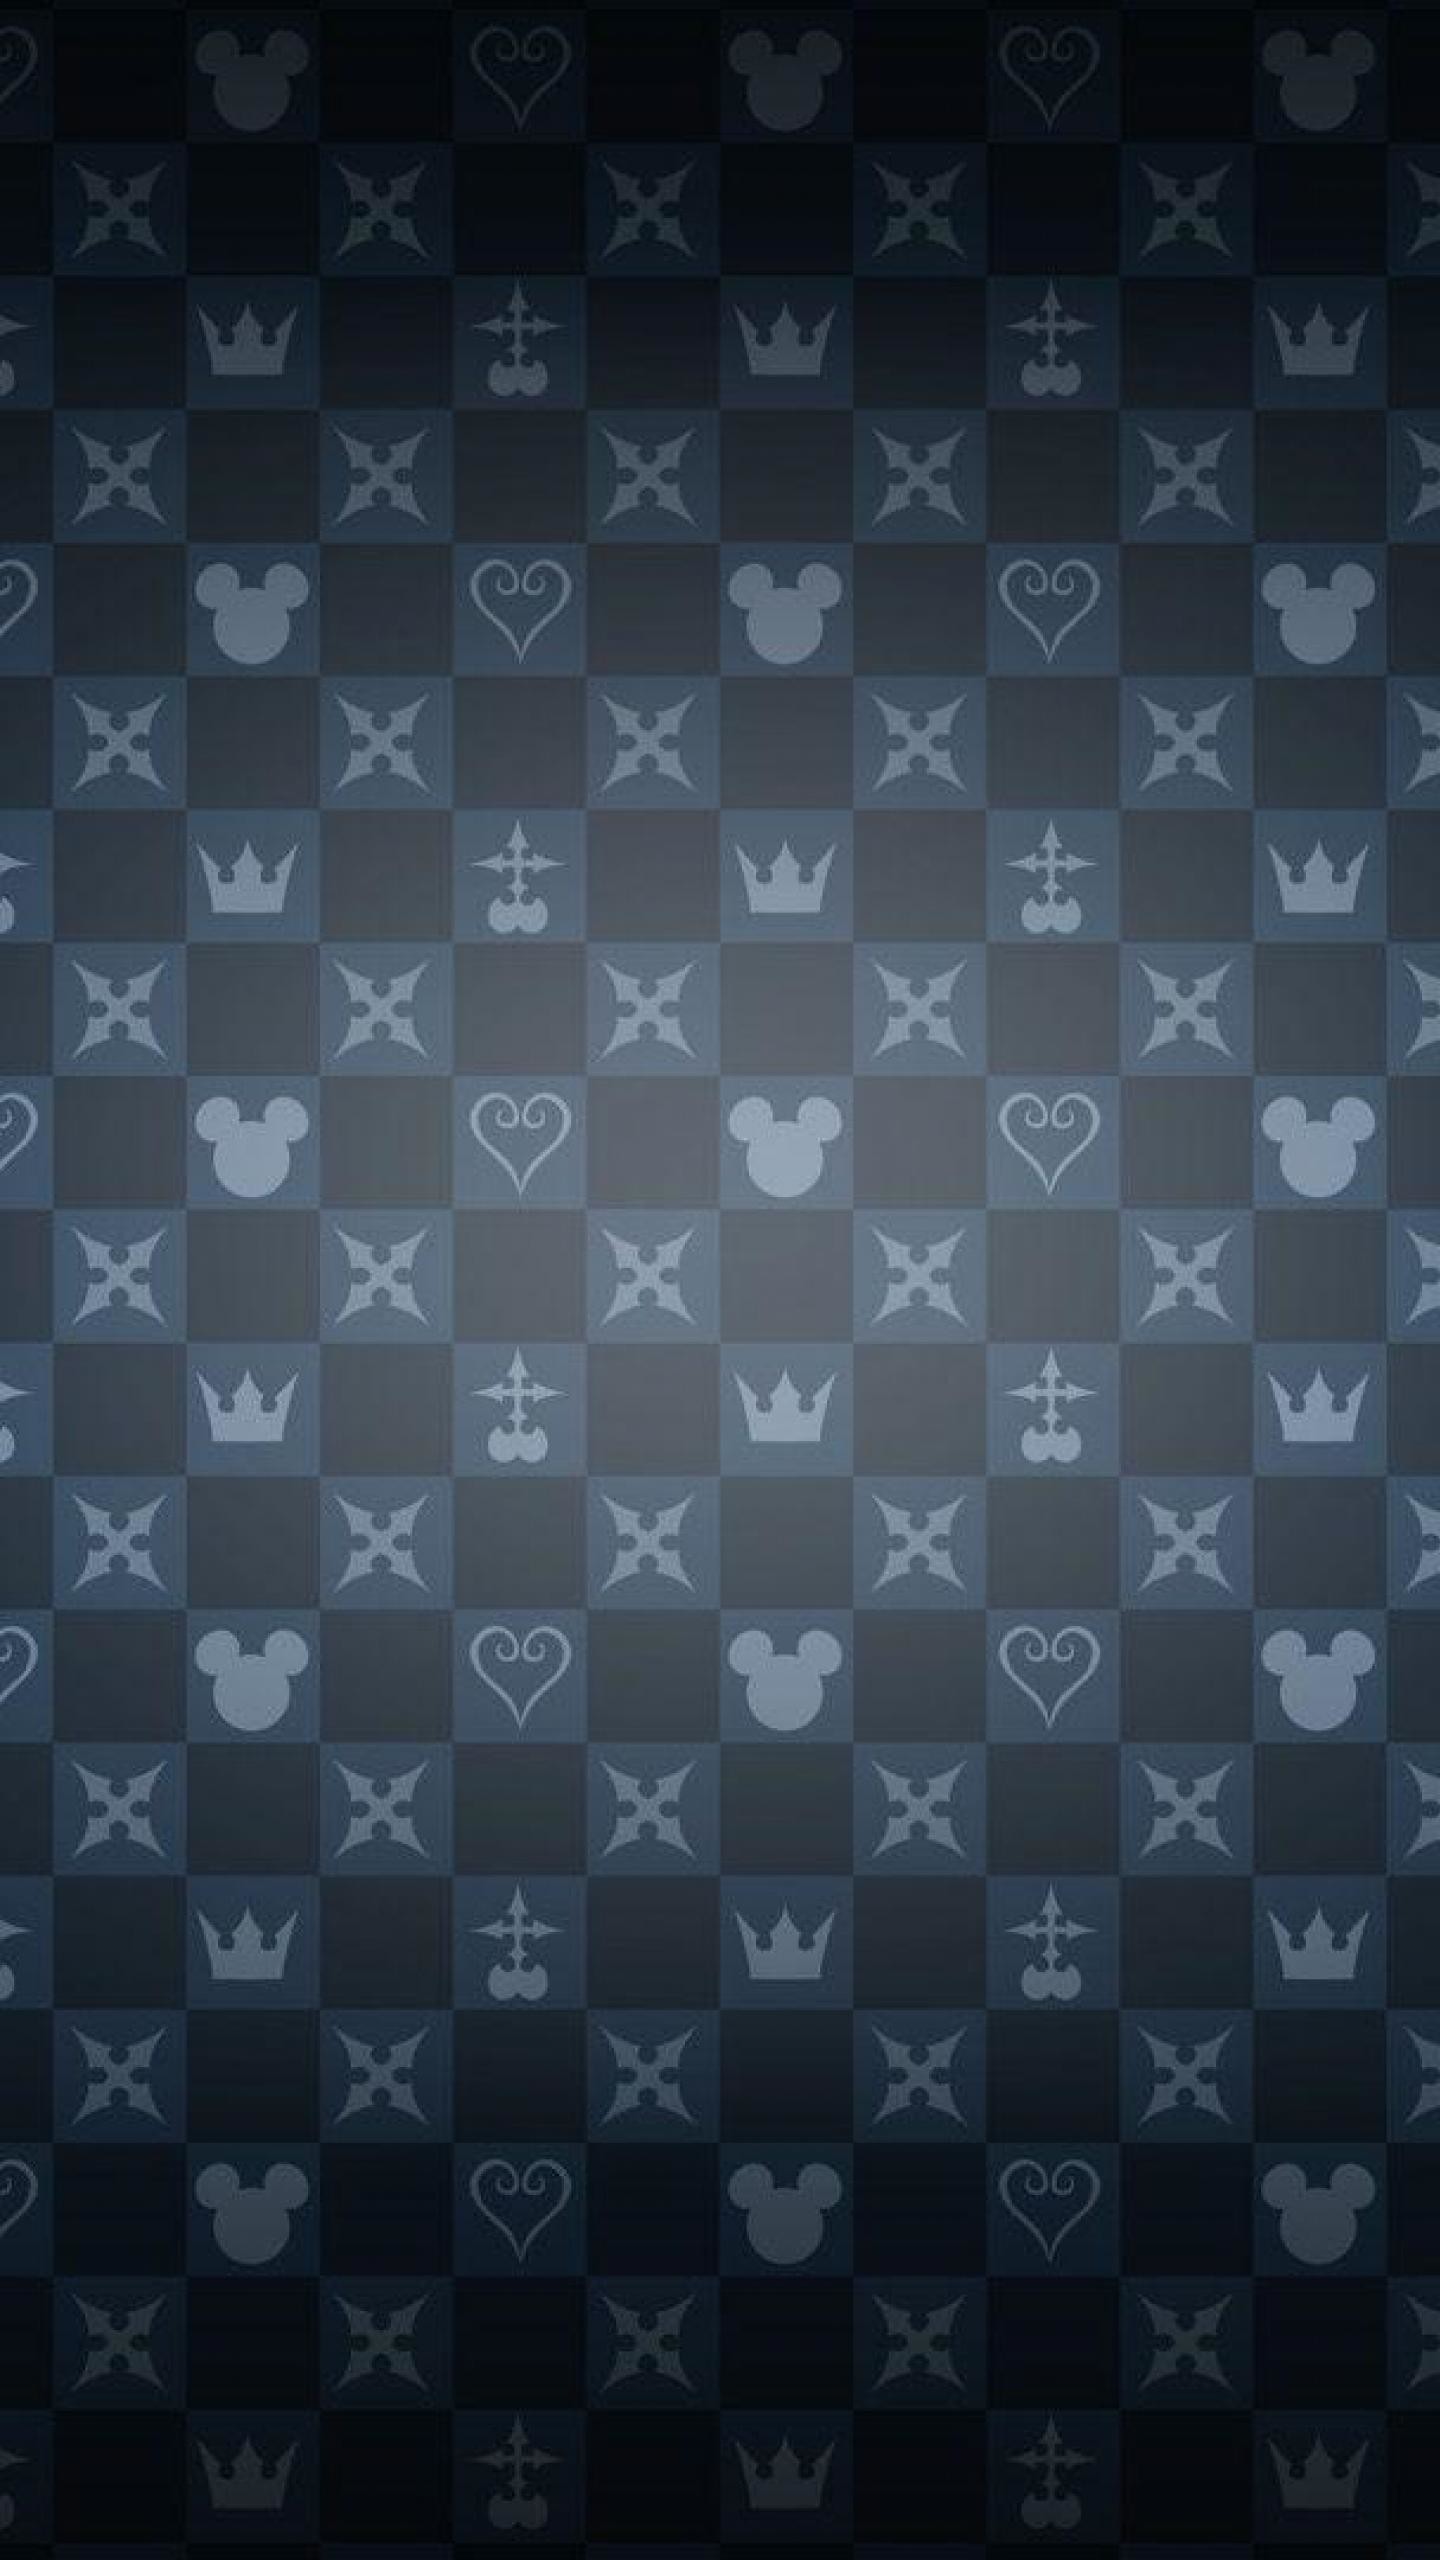 48 Kingdom Hearts Wallpaper iPhone  WallpaperSafari